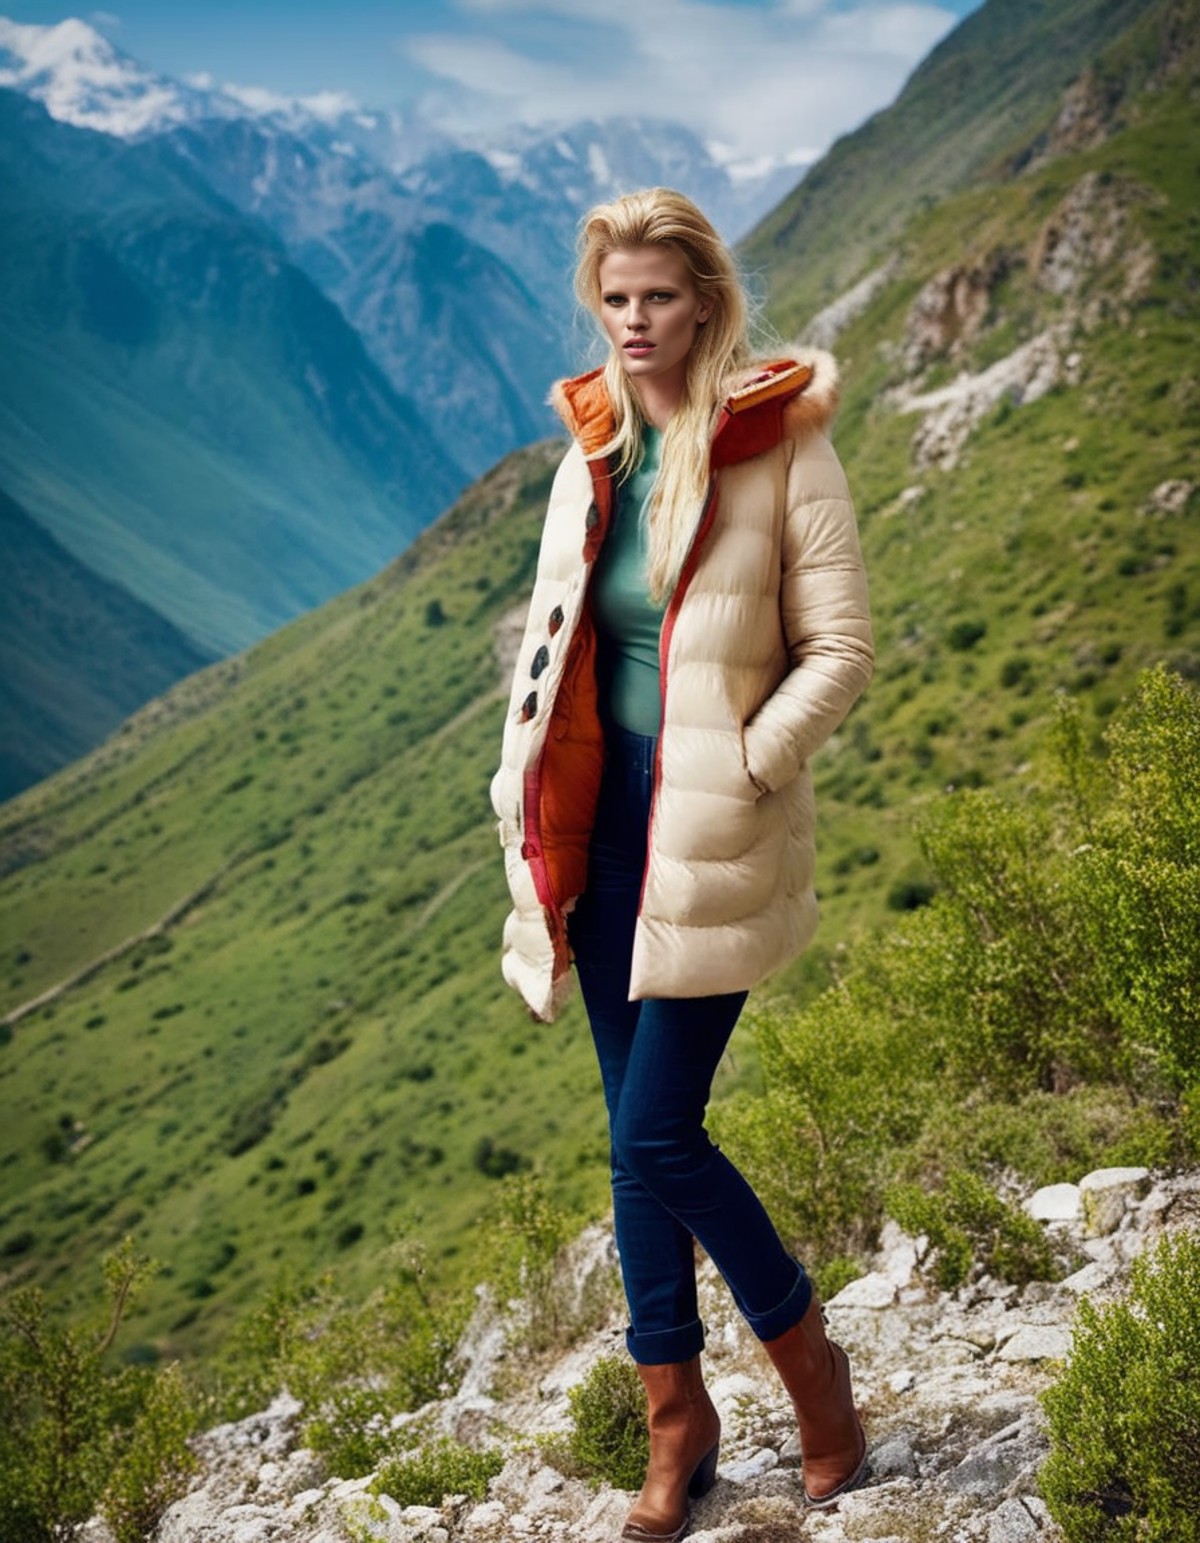 Iran, <lora:LaraStone:1> Lara Stone, a dutch model, 23 year old, posing hiking in the mountains, decently clothed, profess...